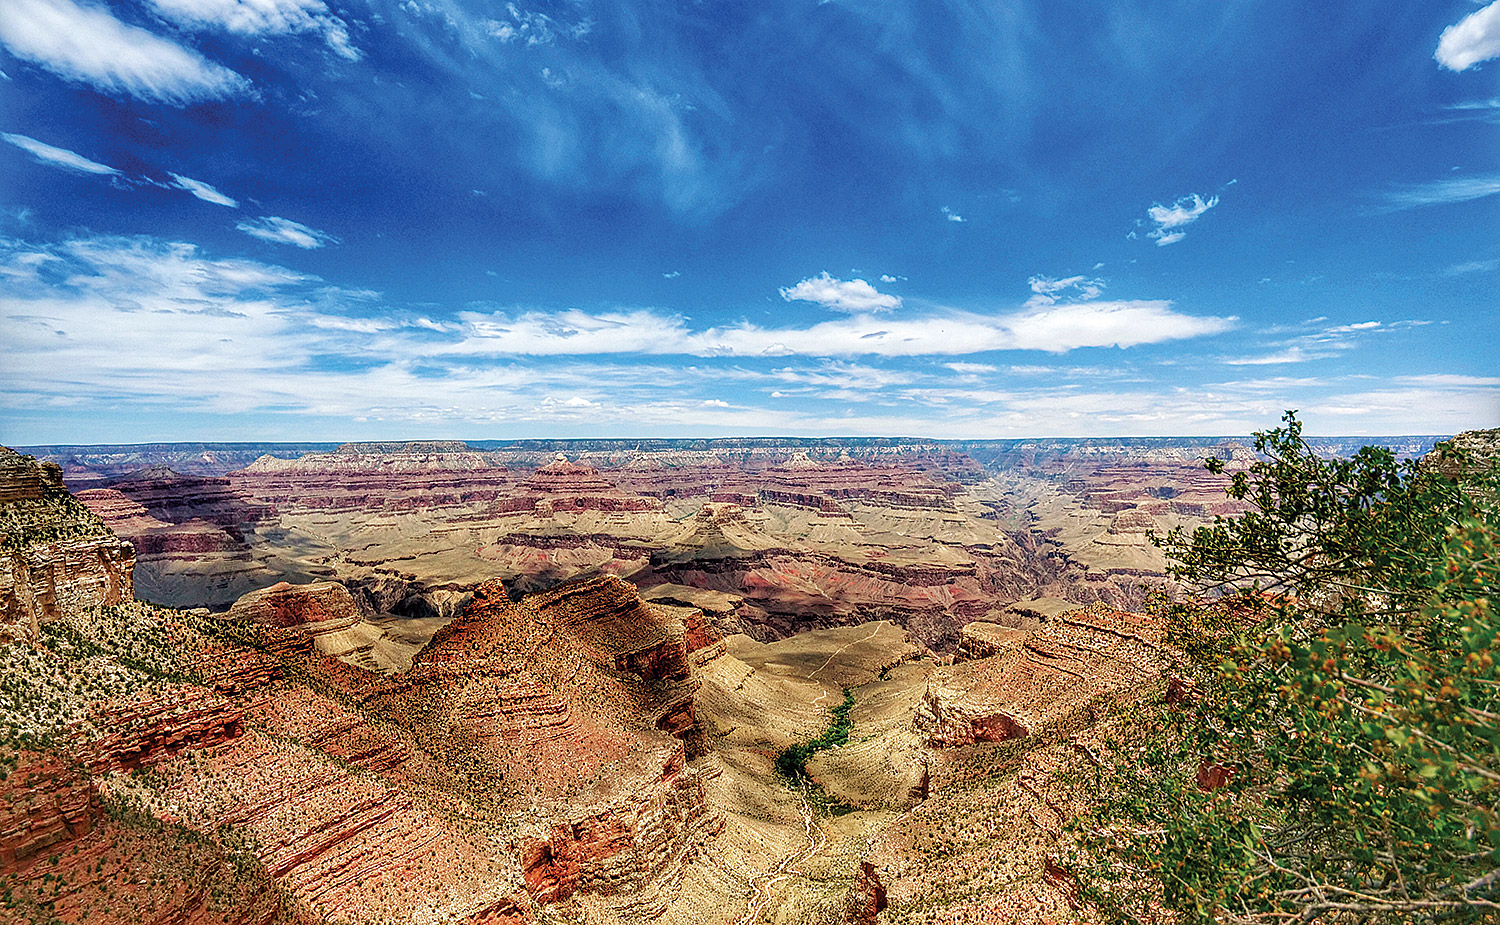 South Rim, Grand Canyon National Park, Arizona - Credit: Ji Rui